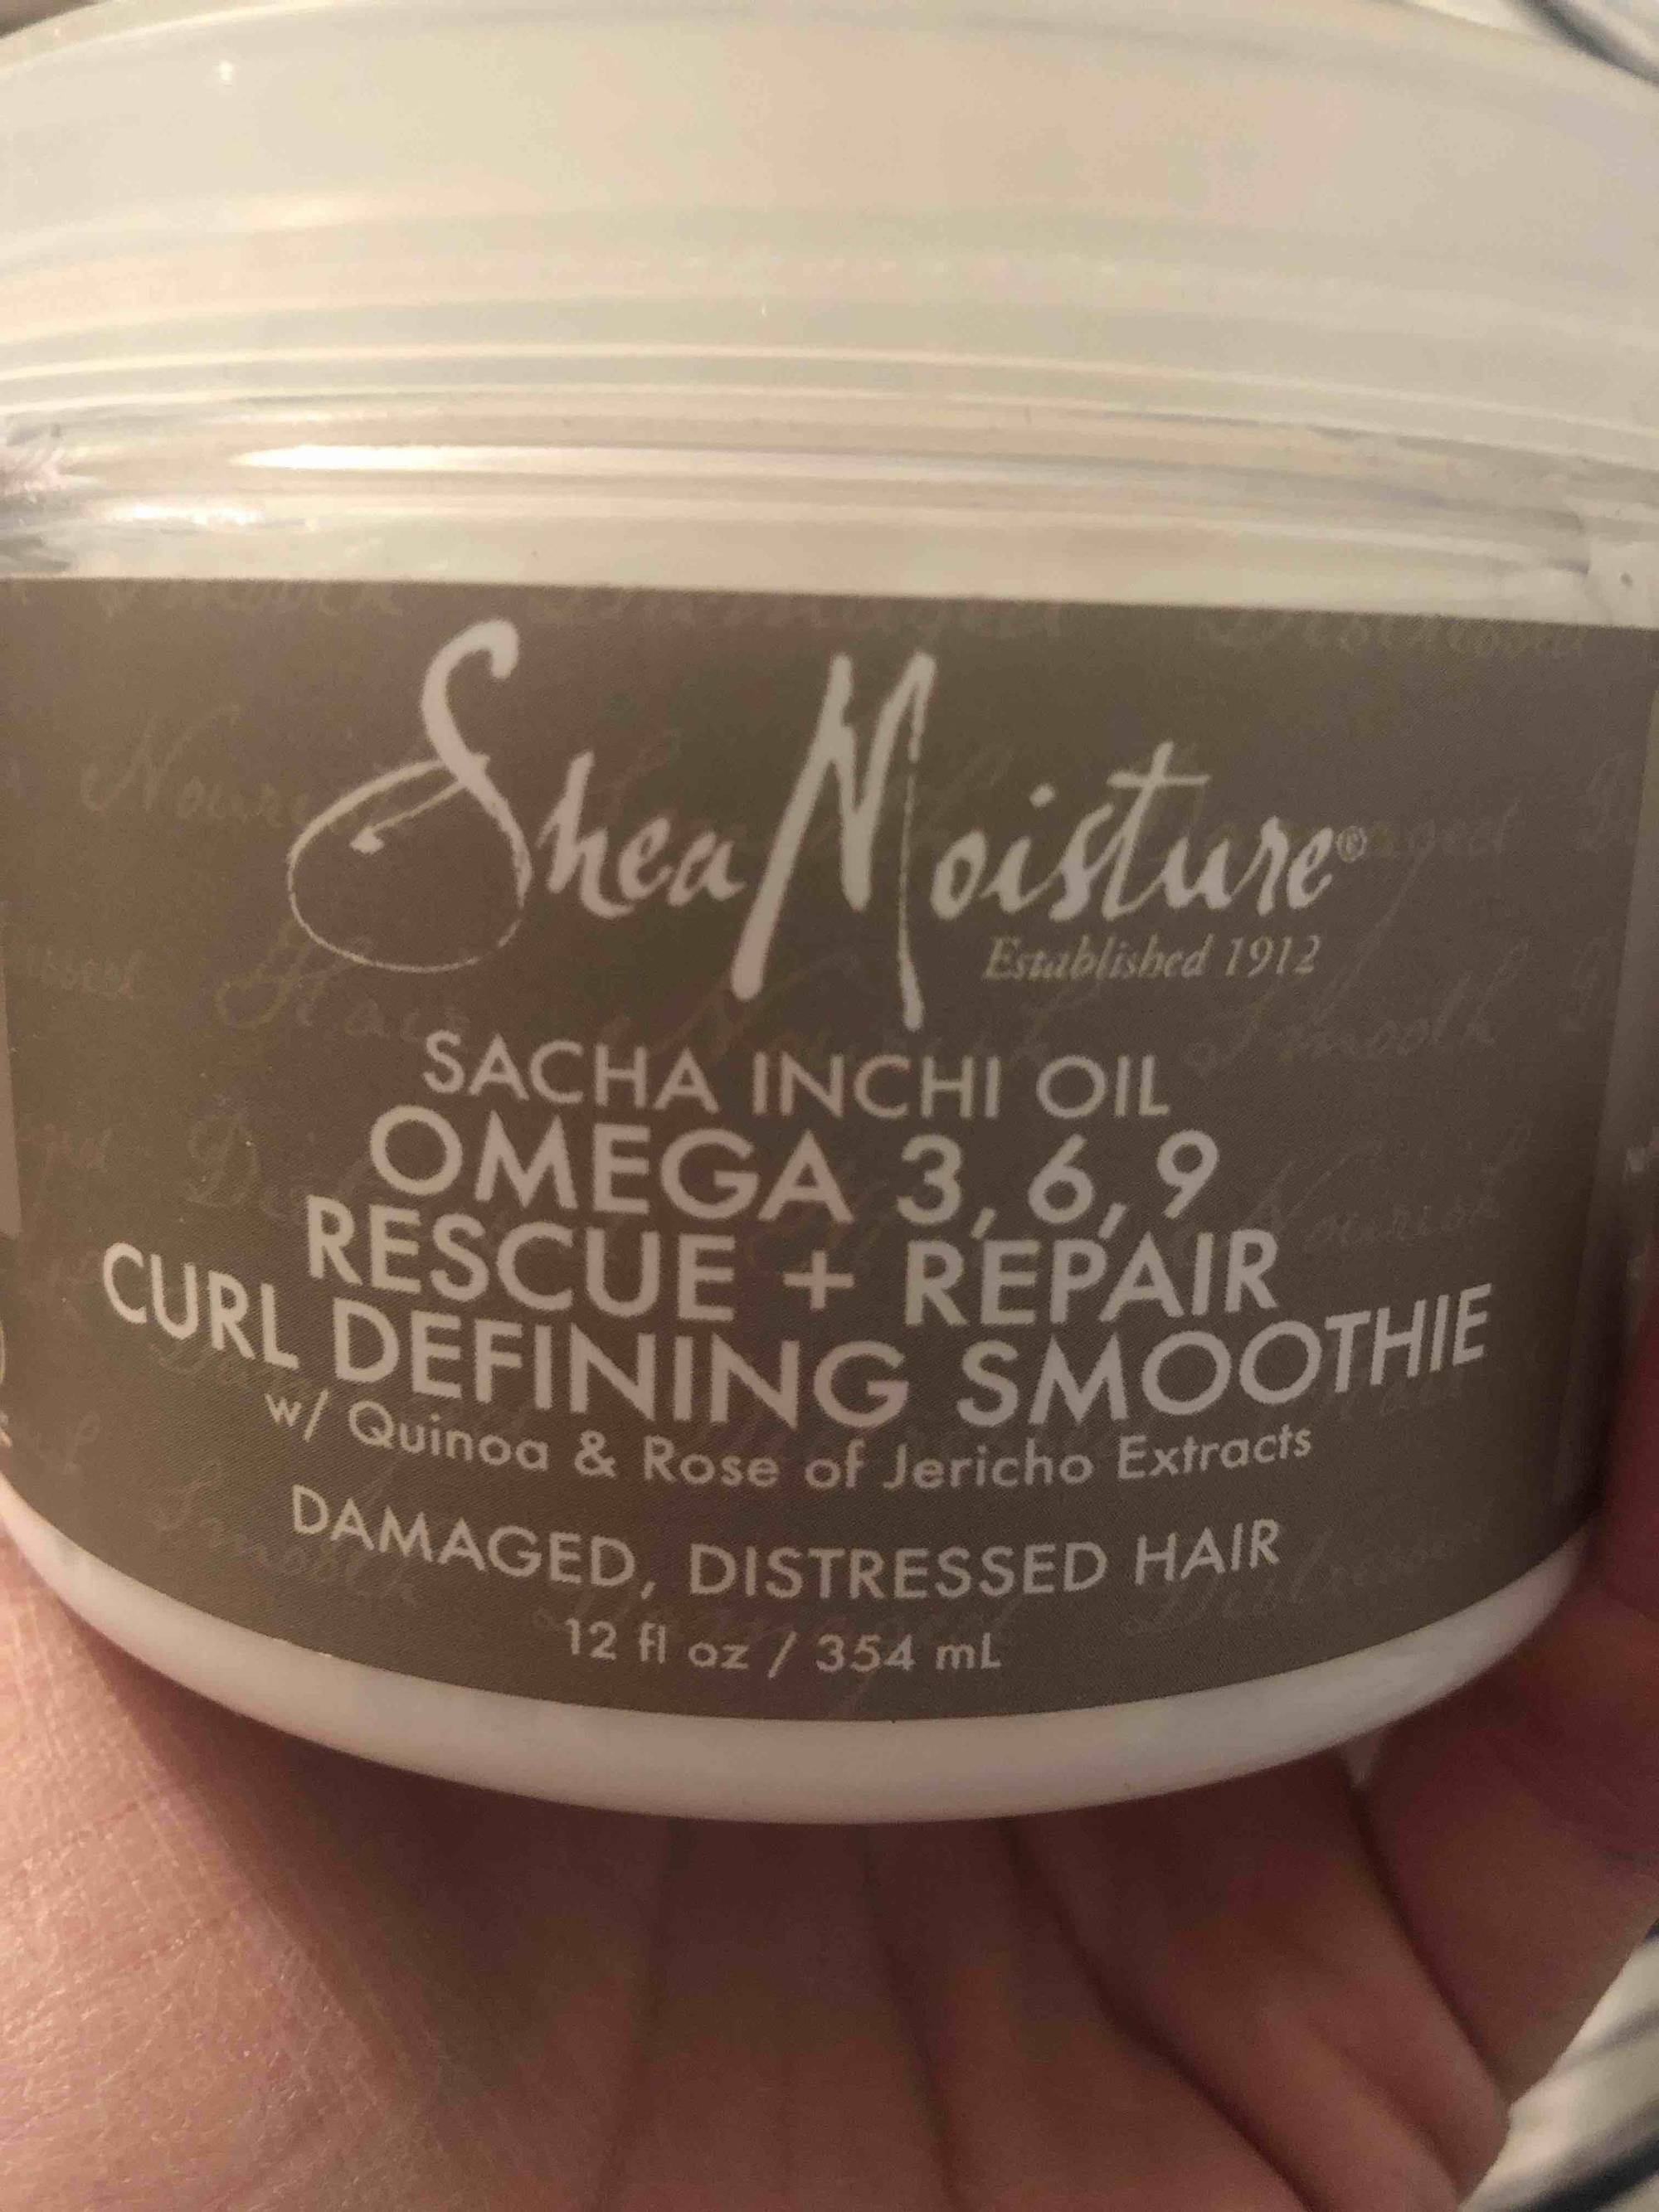 SHEA MOISTURE - Sacha Inchi Oil - Curl defining smoothie